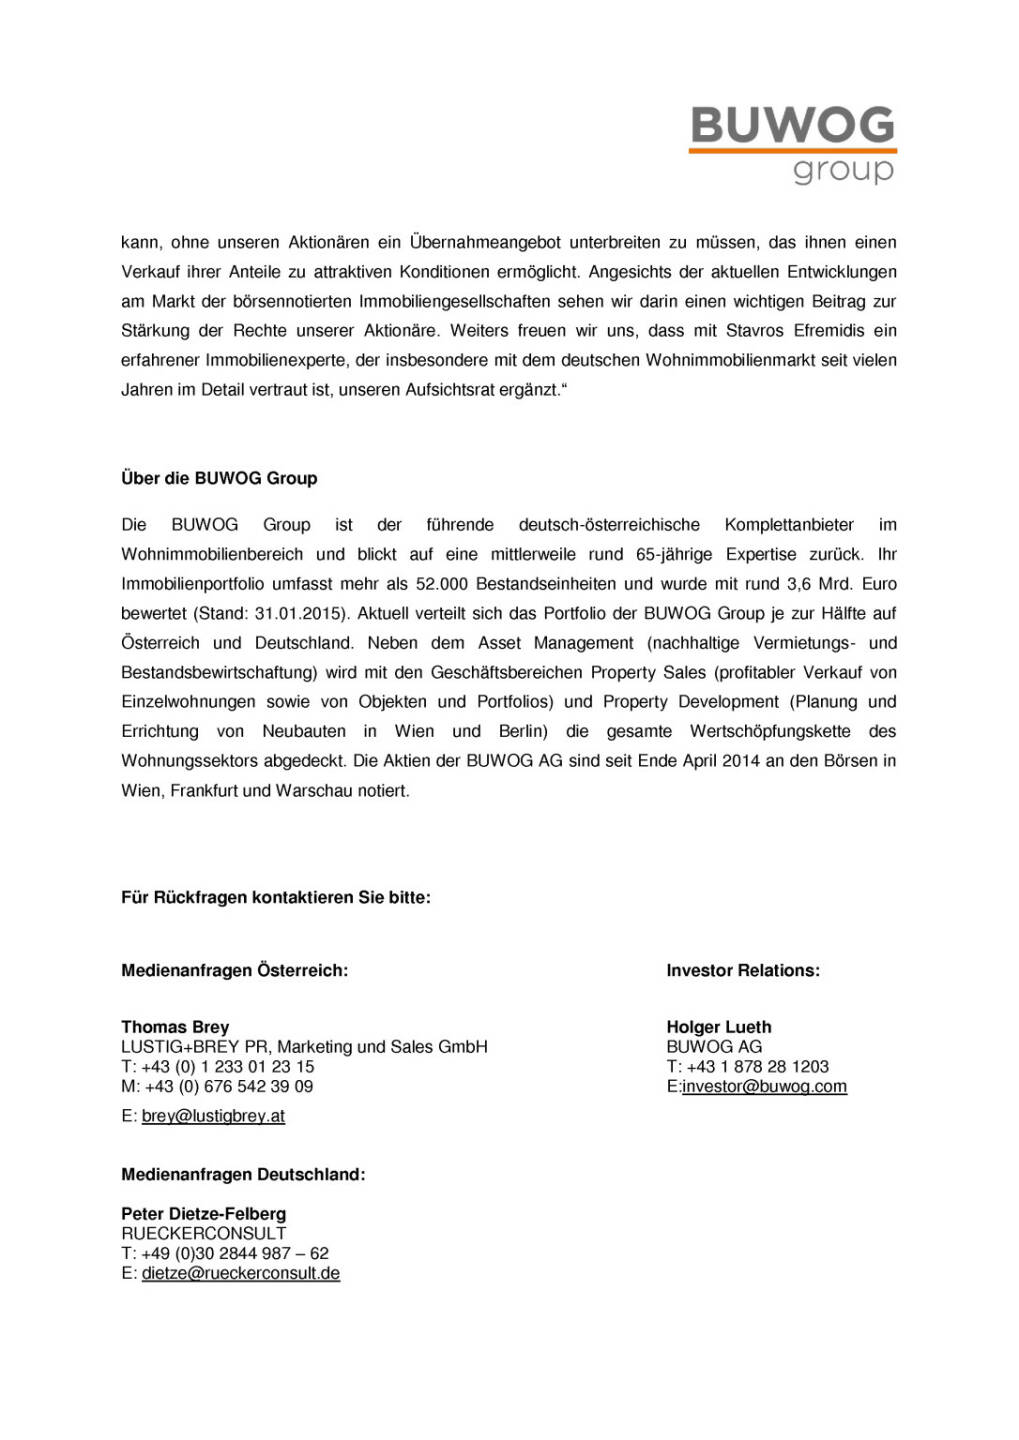 Buwog: Stavros Efremidis als neues Mitglied des Aufsichtsrats gewählt, Seite 2/2, komplettes Dokument unter http://boerse-social.com/static/uploads/file_96_buwog_efremidis.pdf